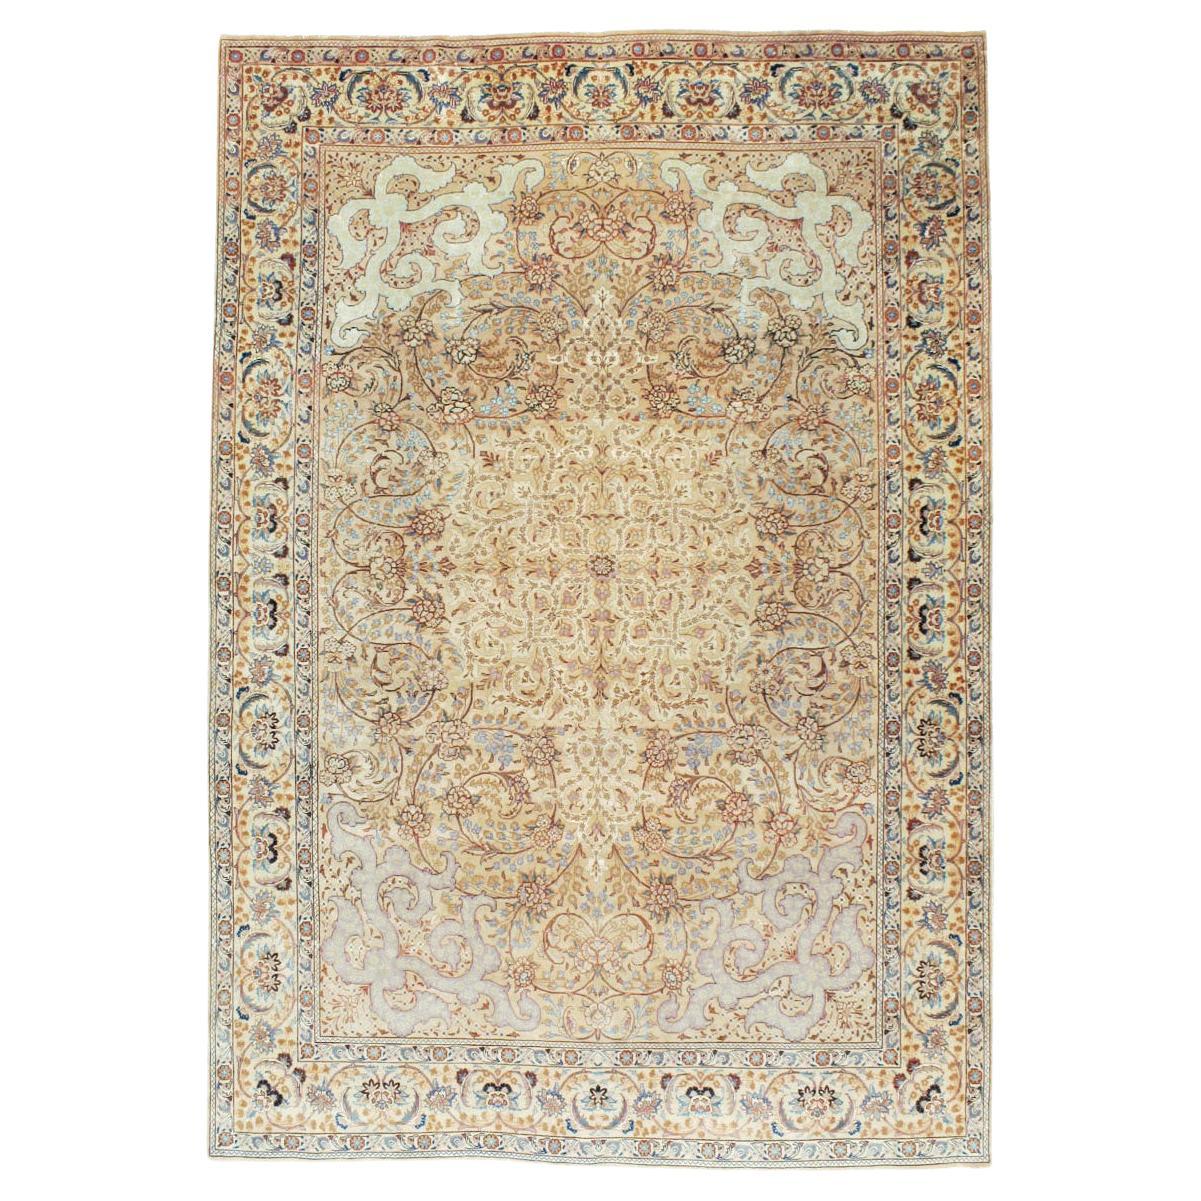 Mid-20th Century Handmade Persian Tabriz Room Size Carpet